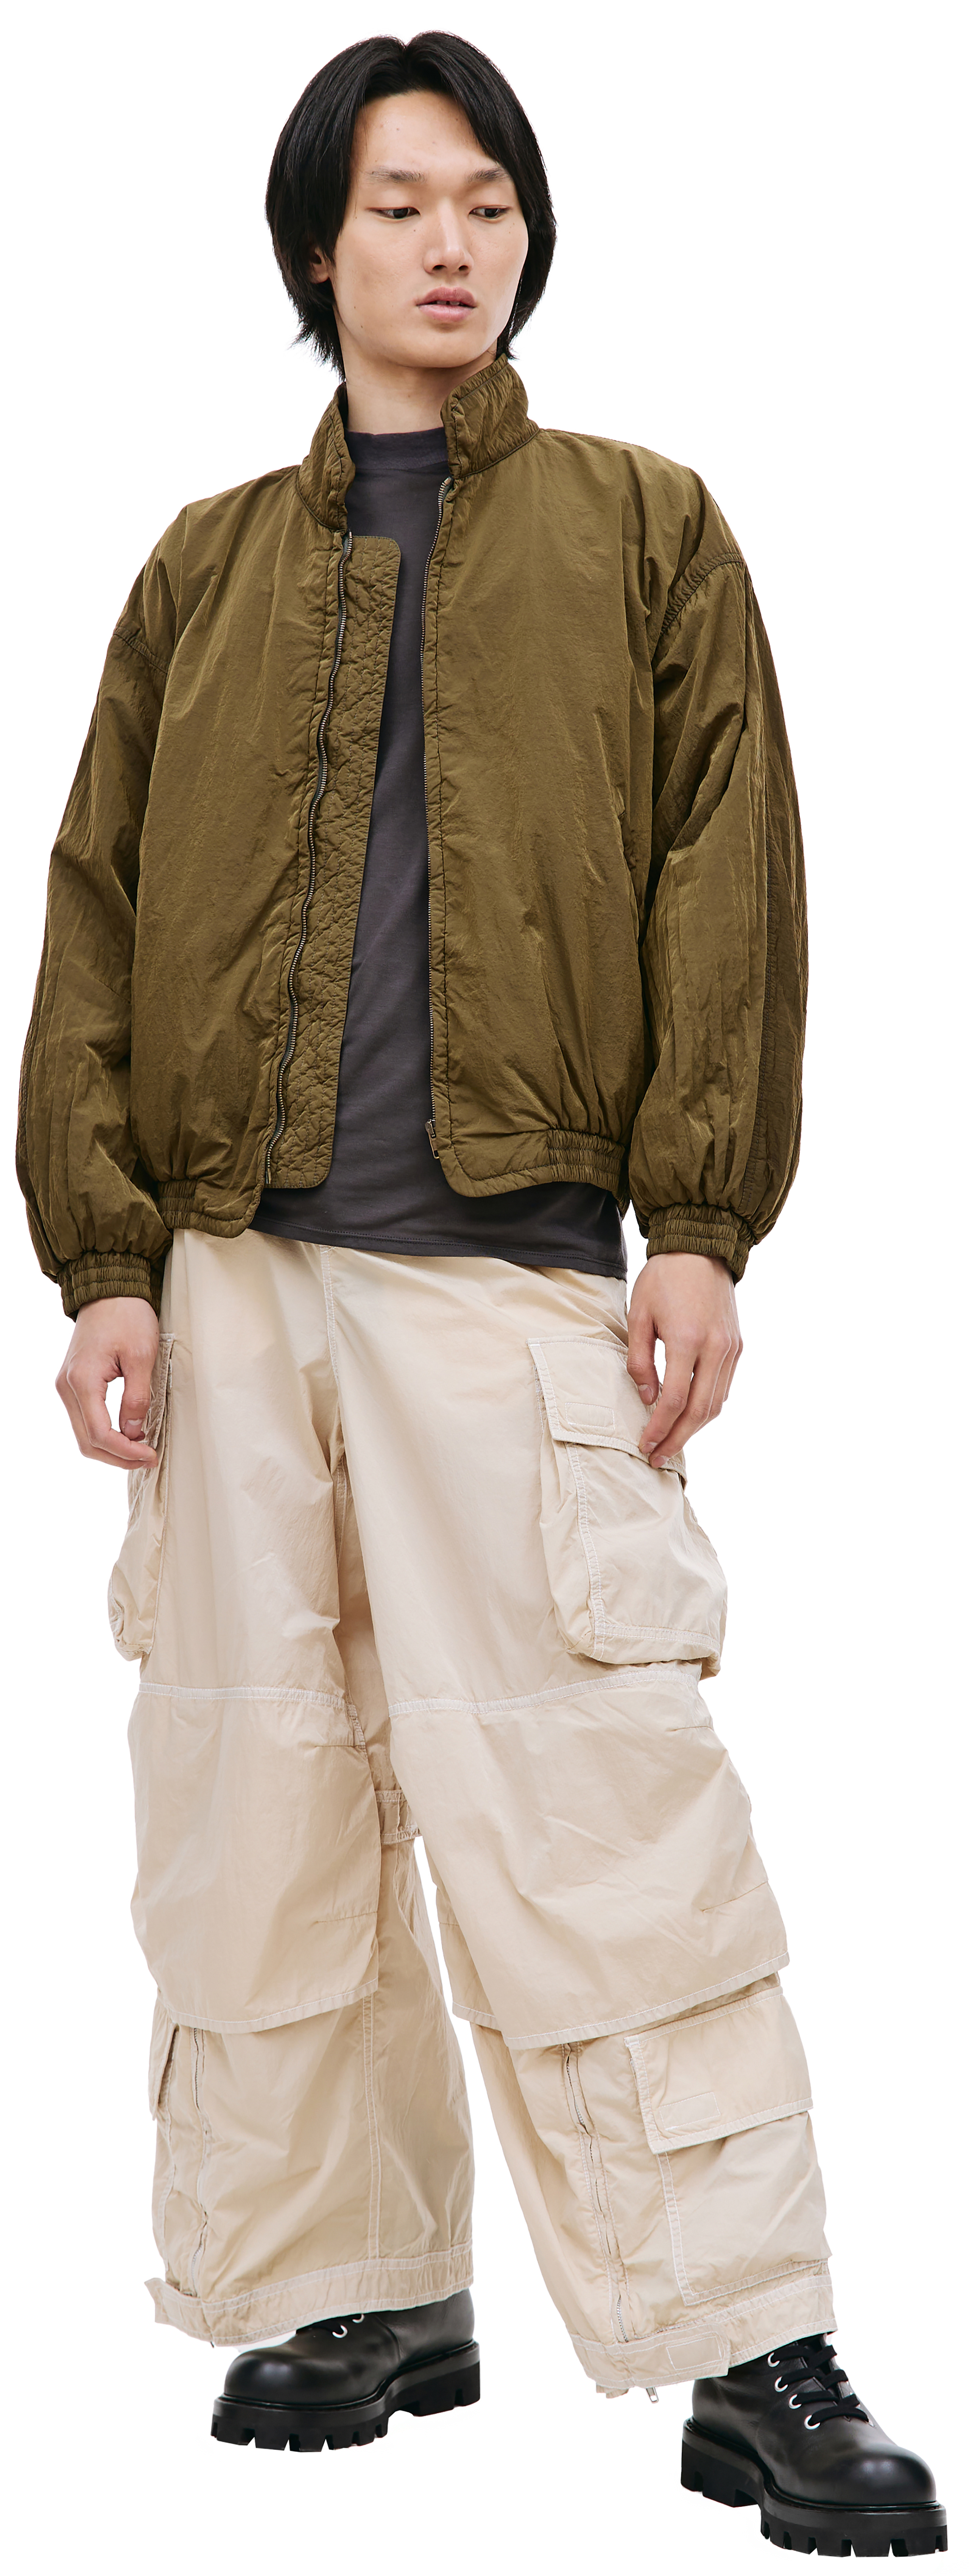 Buy Hed Mayner men khaki zipped bomber jacket for €930 online